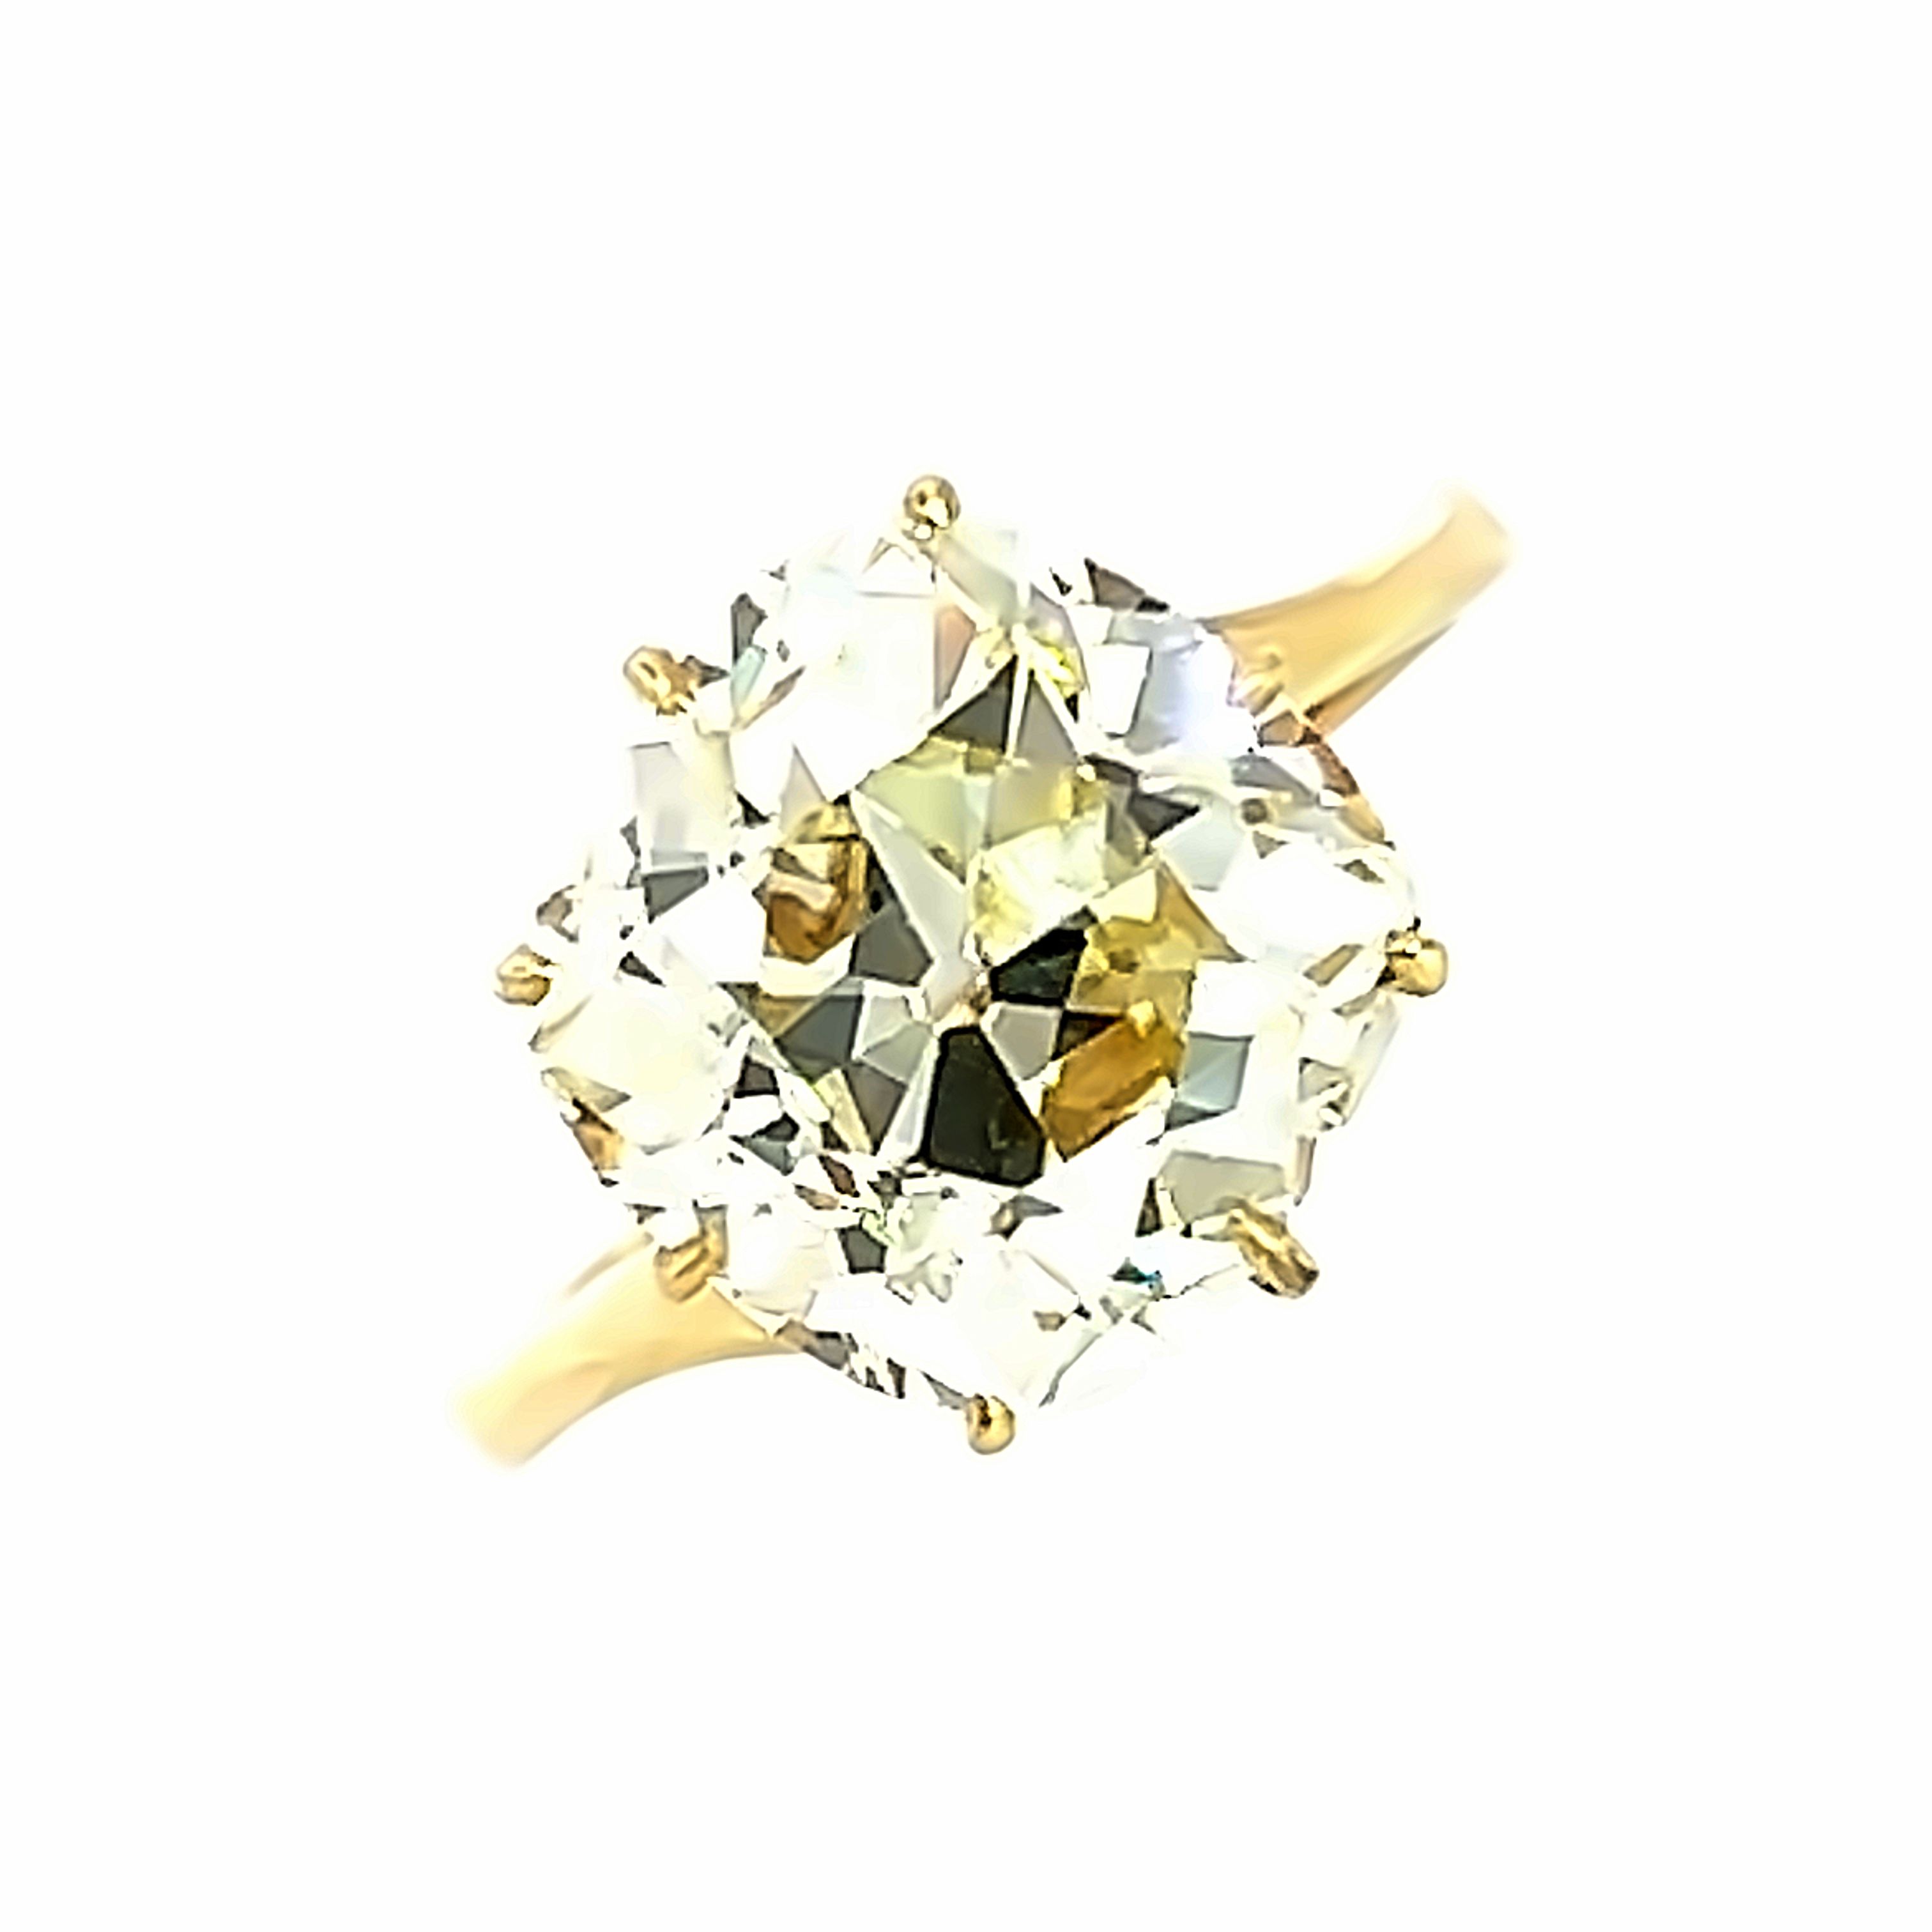 Stunning Old Mine Cut Diamond Ring